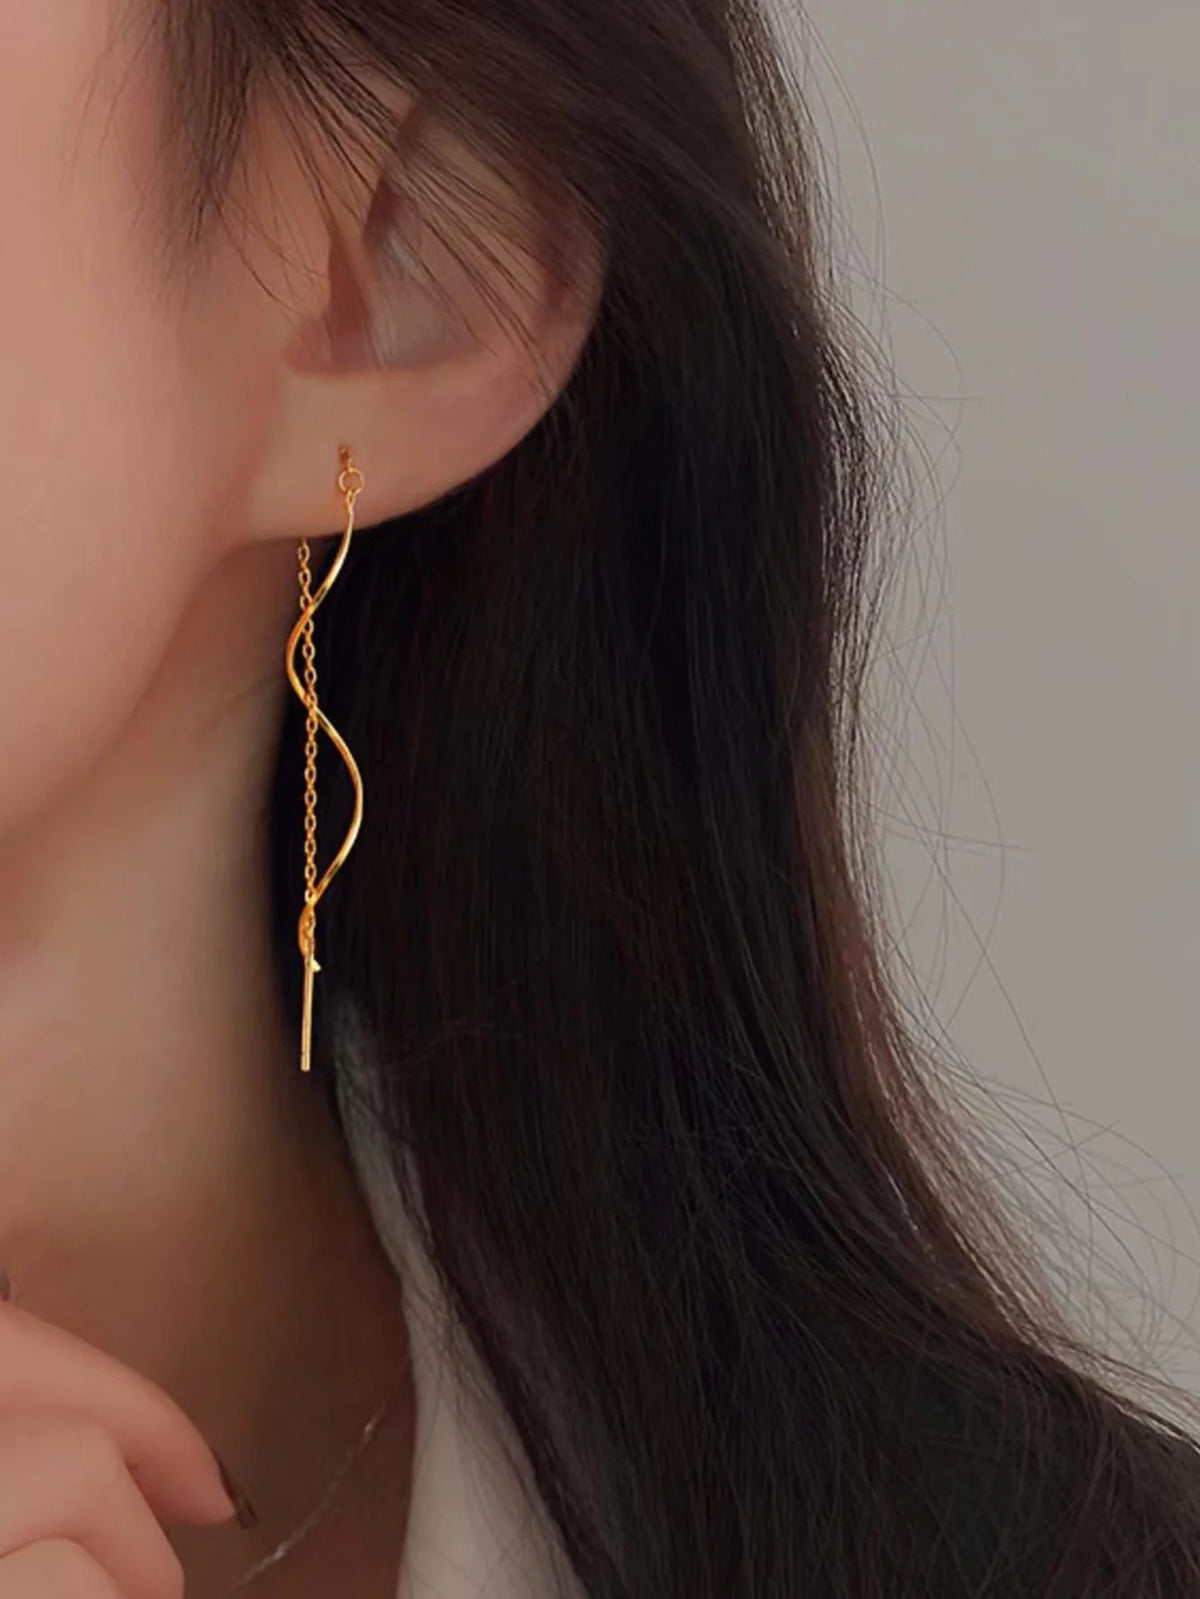 Ear Thread Earrings Gold Plated Stainless Steel 18K Gold Plated Curve Dangle Earrings Waterproof